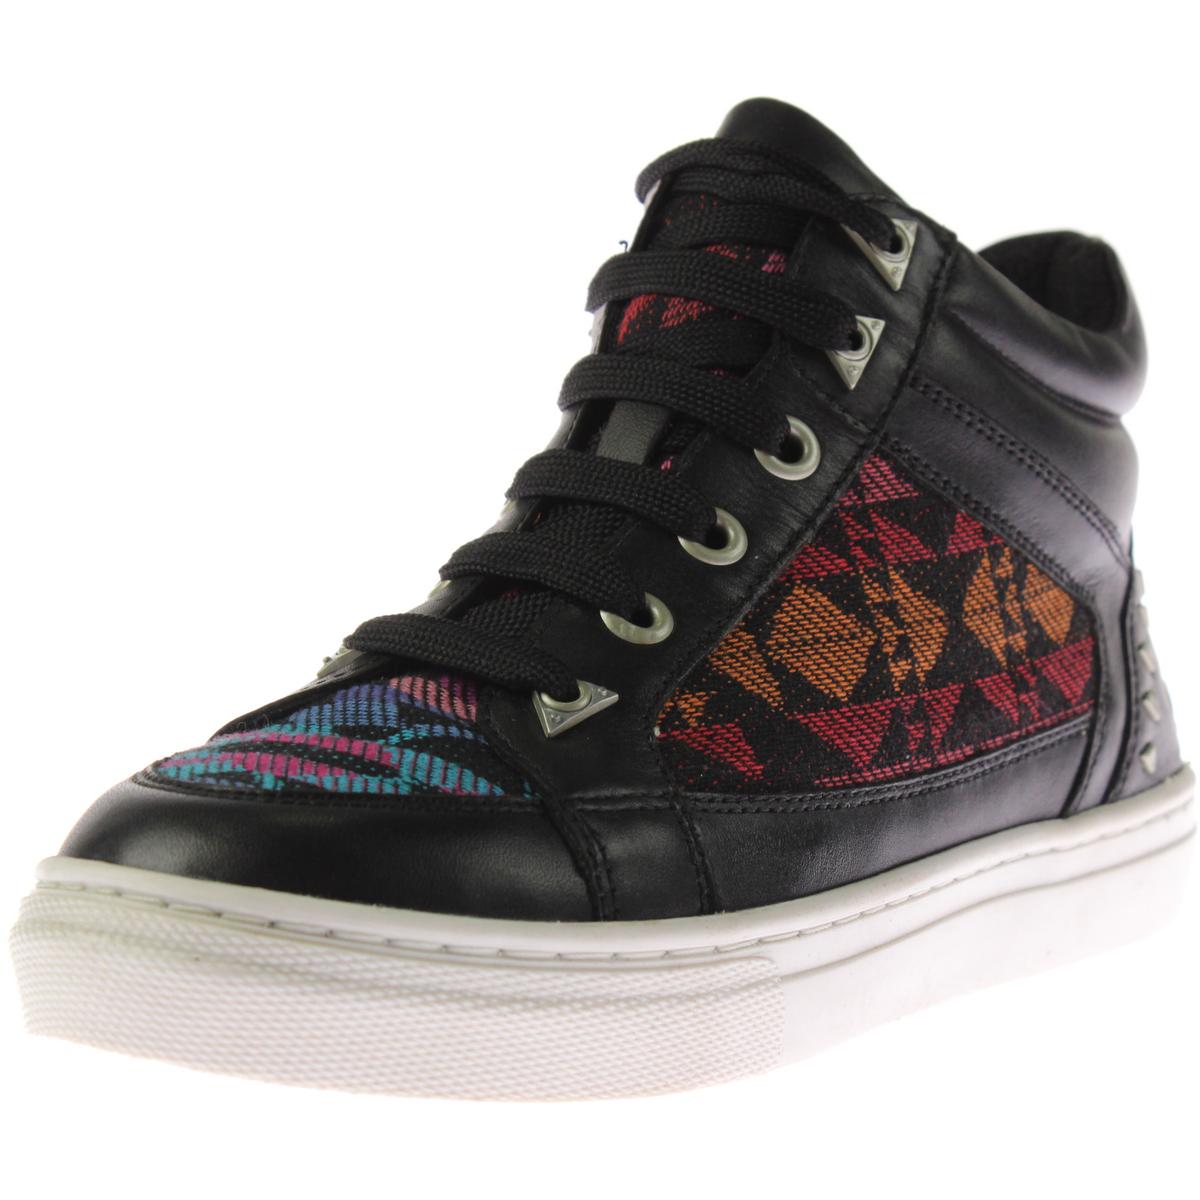 Bronx 0821 Womens Zoo Nee Leather Tribal Knit Fashion Sneakers Shoes BHFO